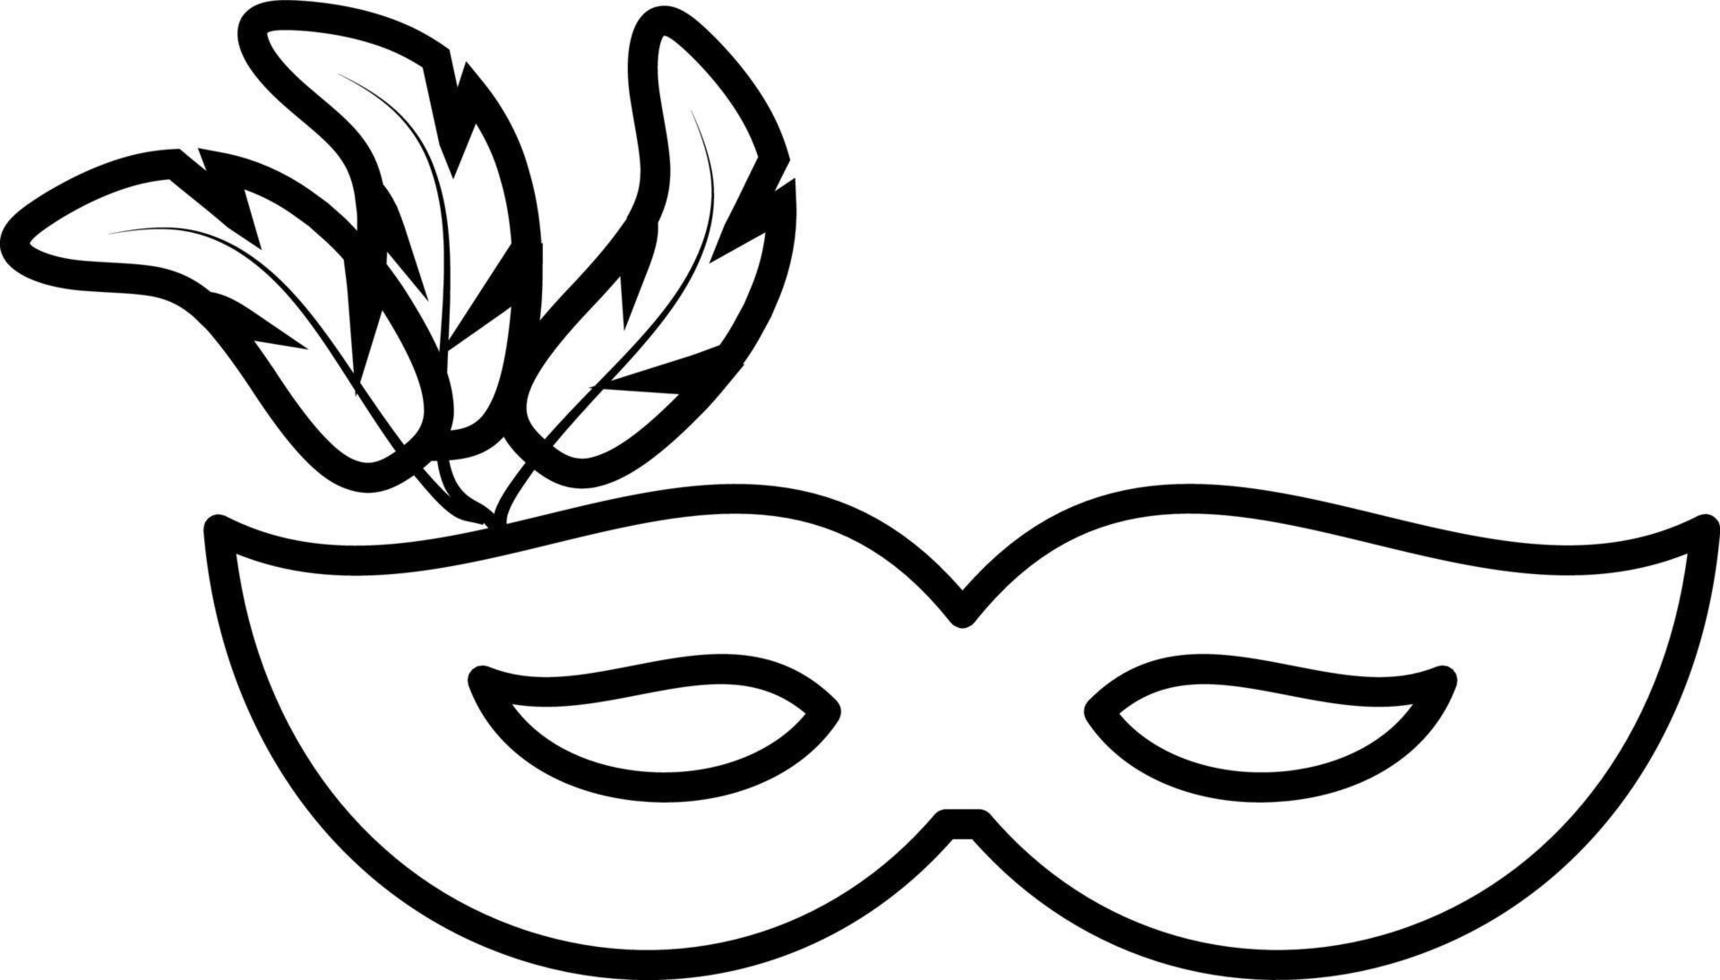 Eye mask, theater. Illustration vector icon on white background